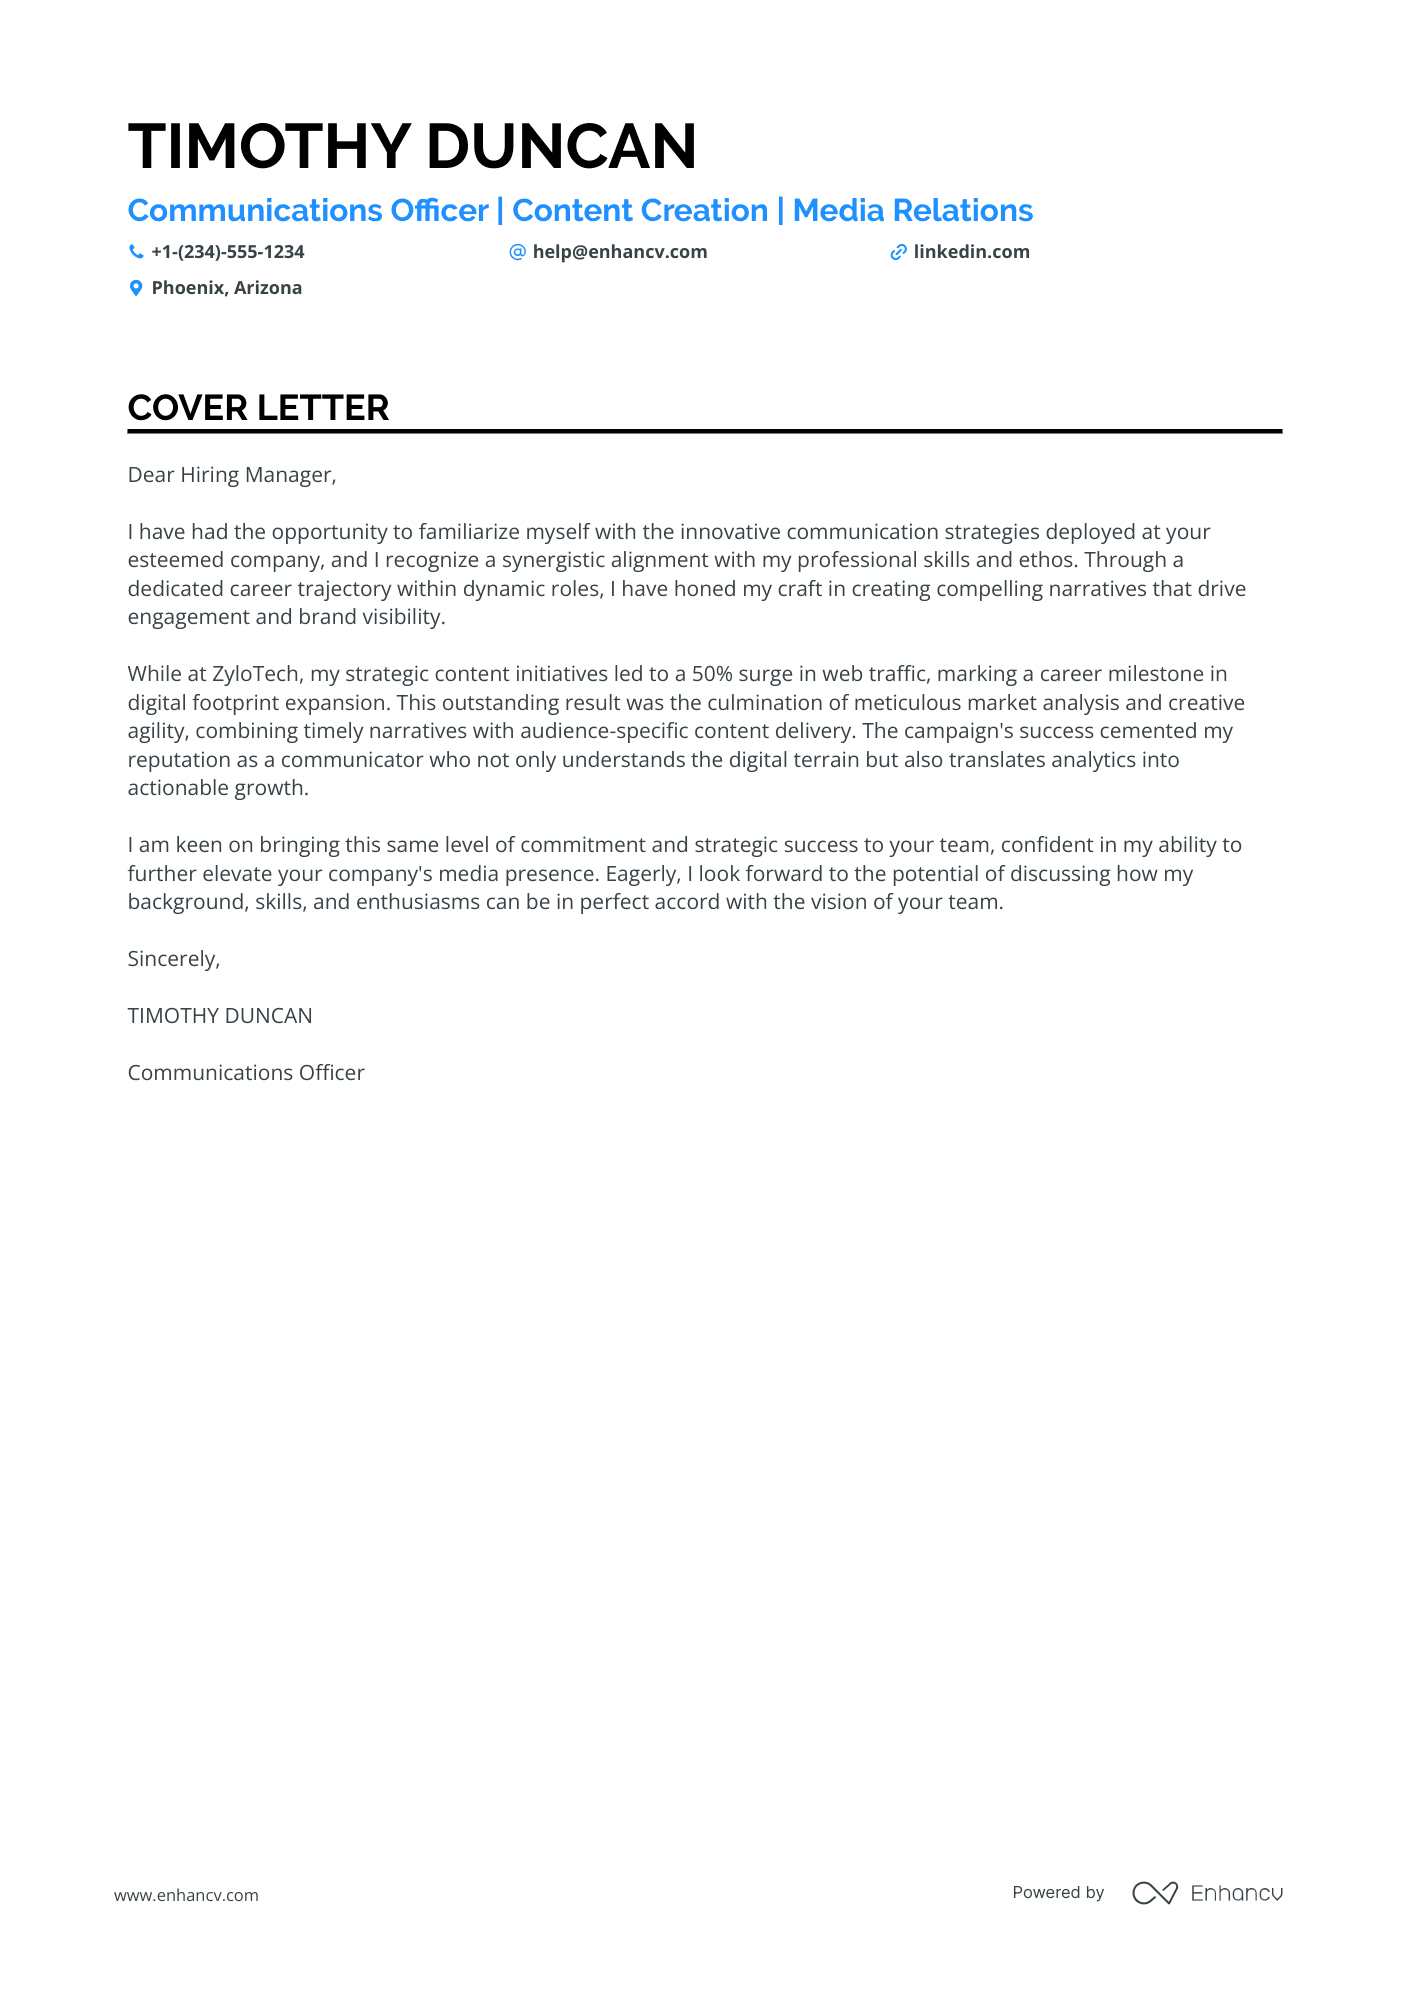 Communications Officer cover letter